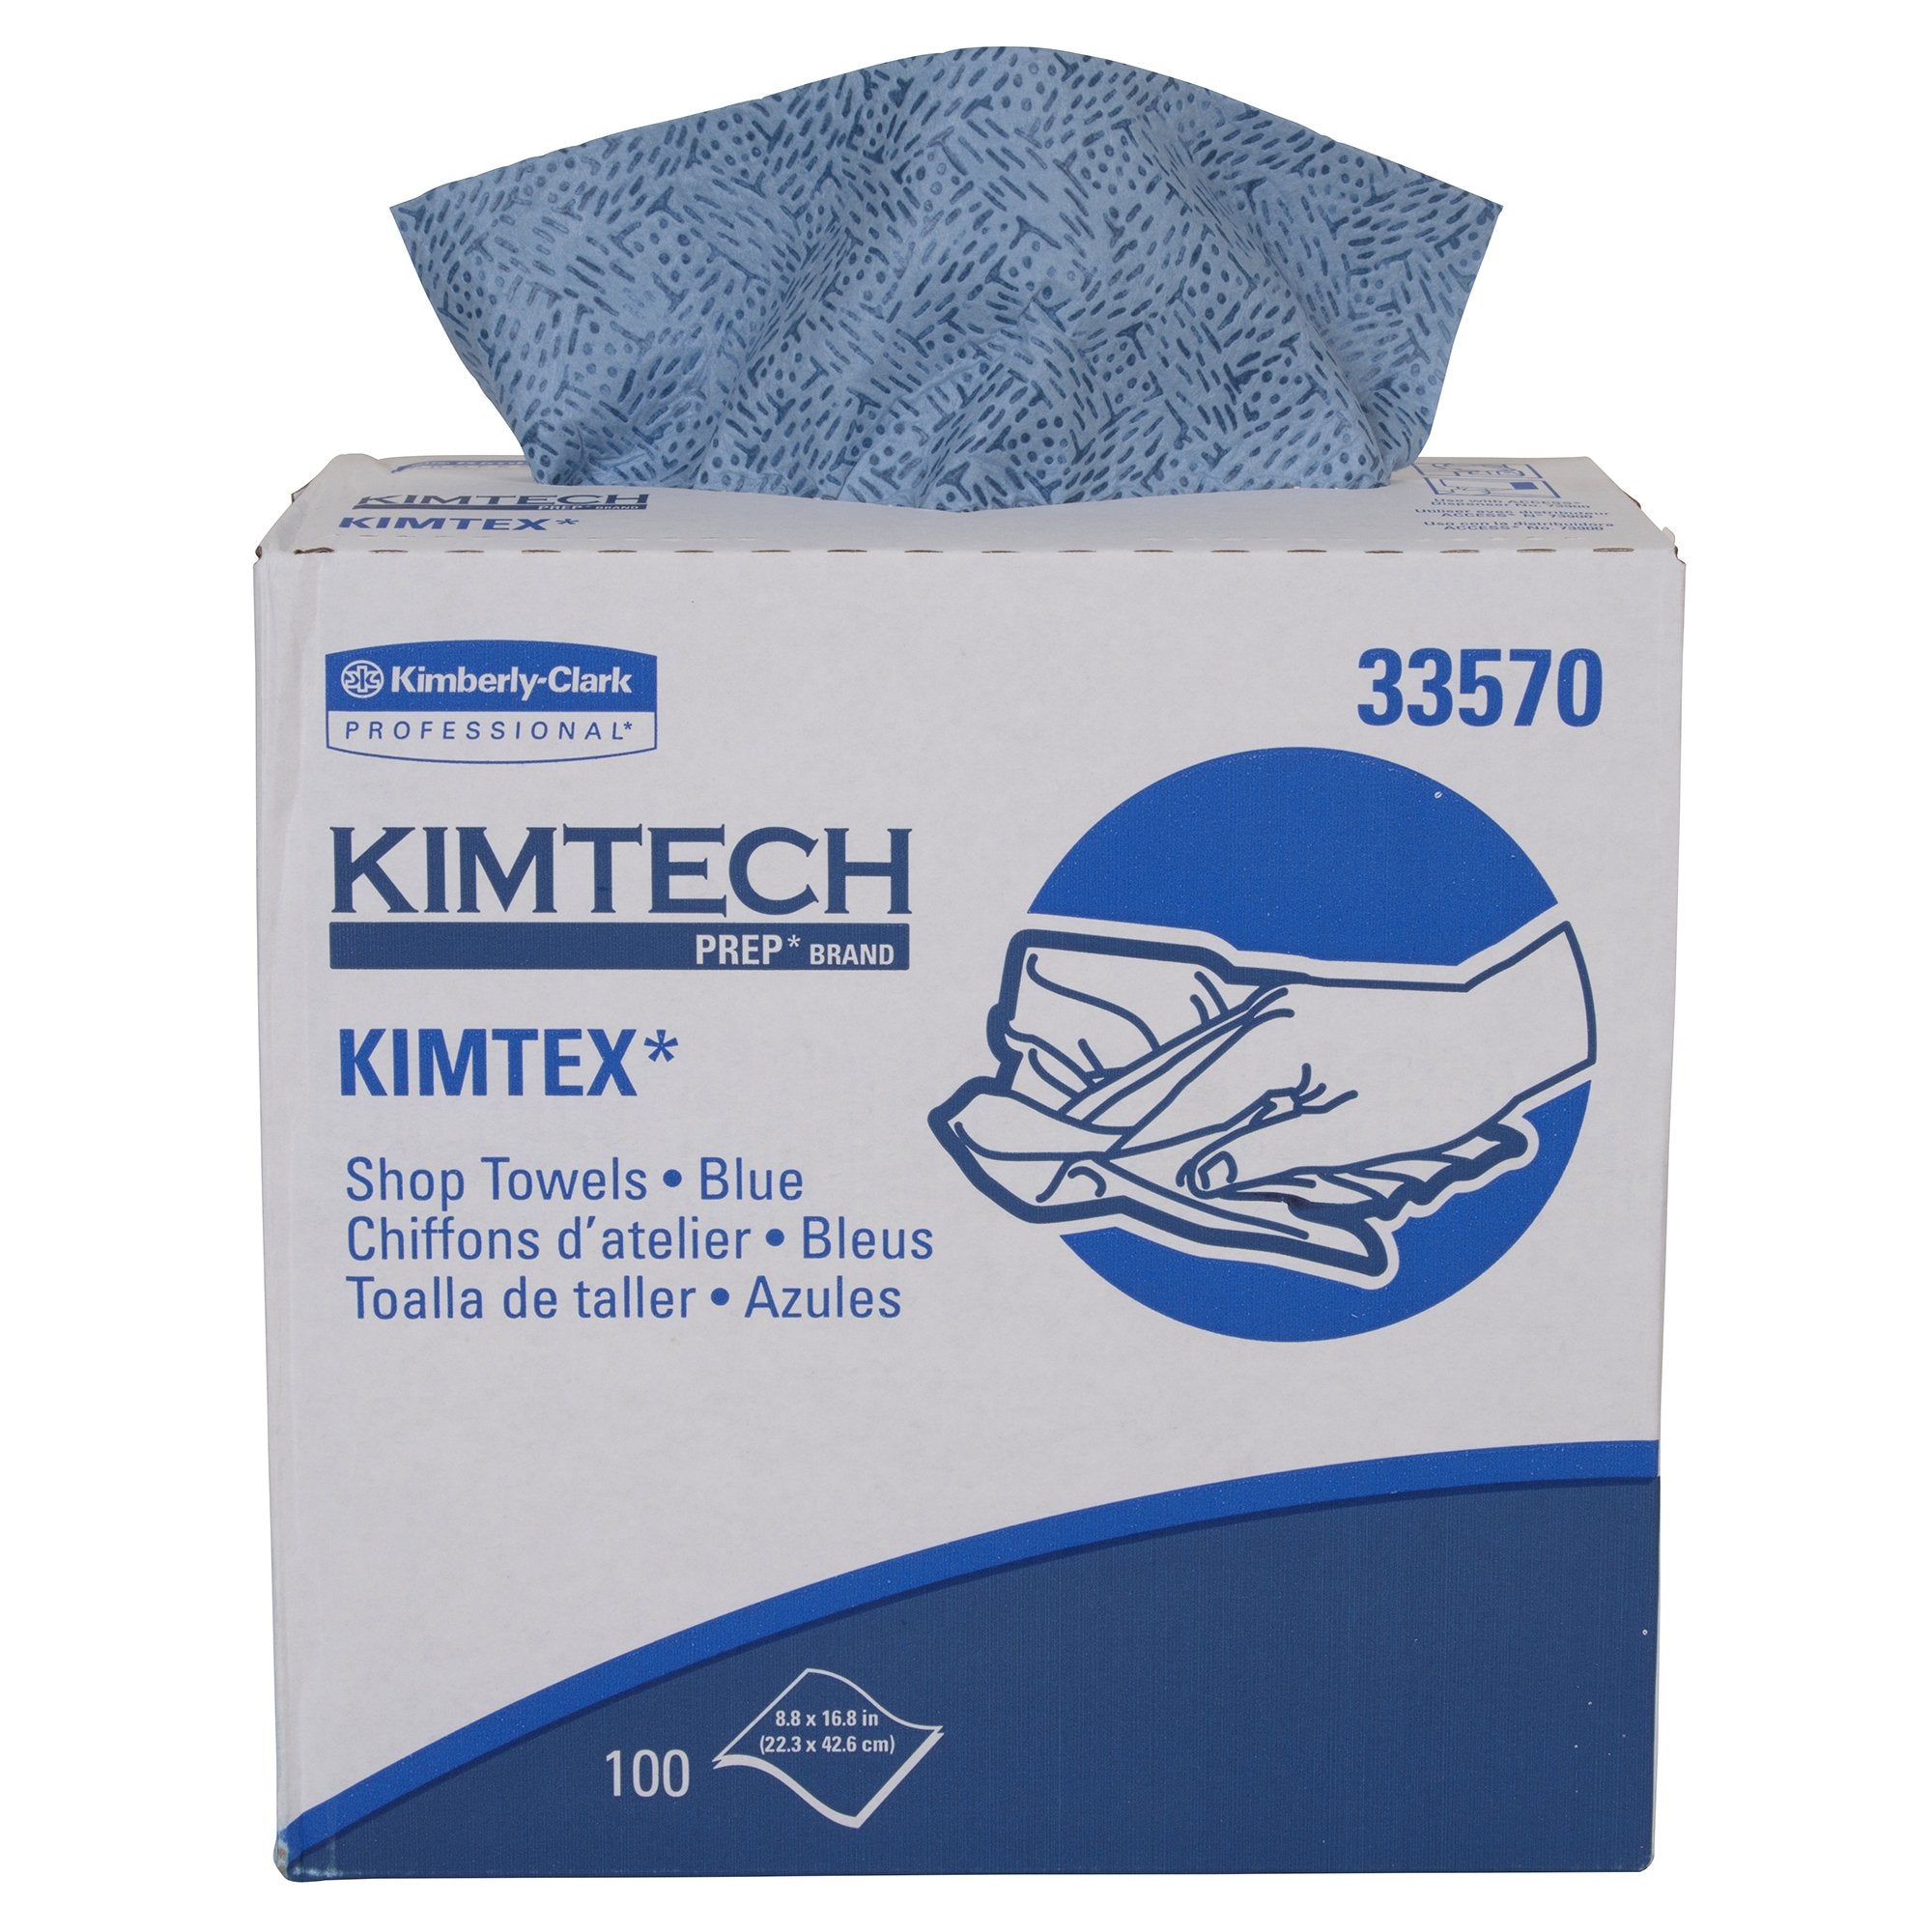 Task Wipe Kimtech Prep Kimtex Heavy Duty Blue NonSterile Polypropylene 8-4/5 X 16-4/5 Inch Disposable